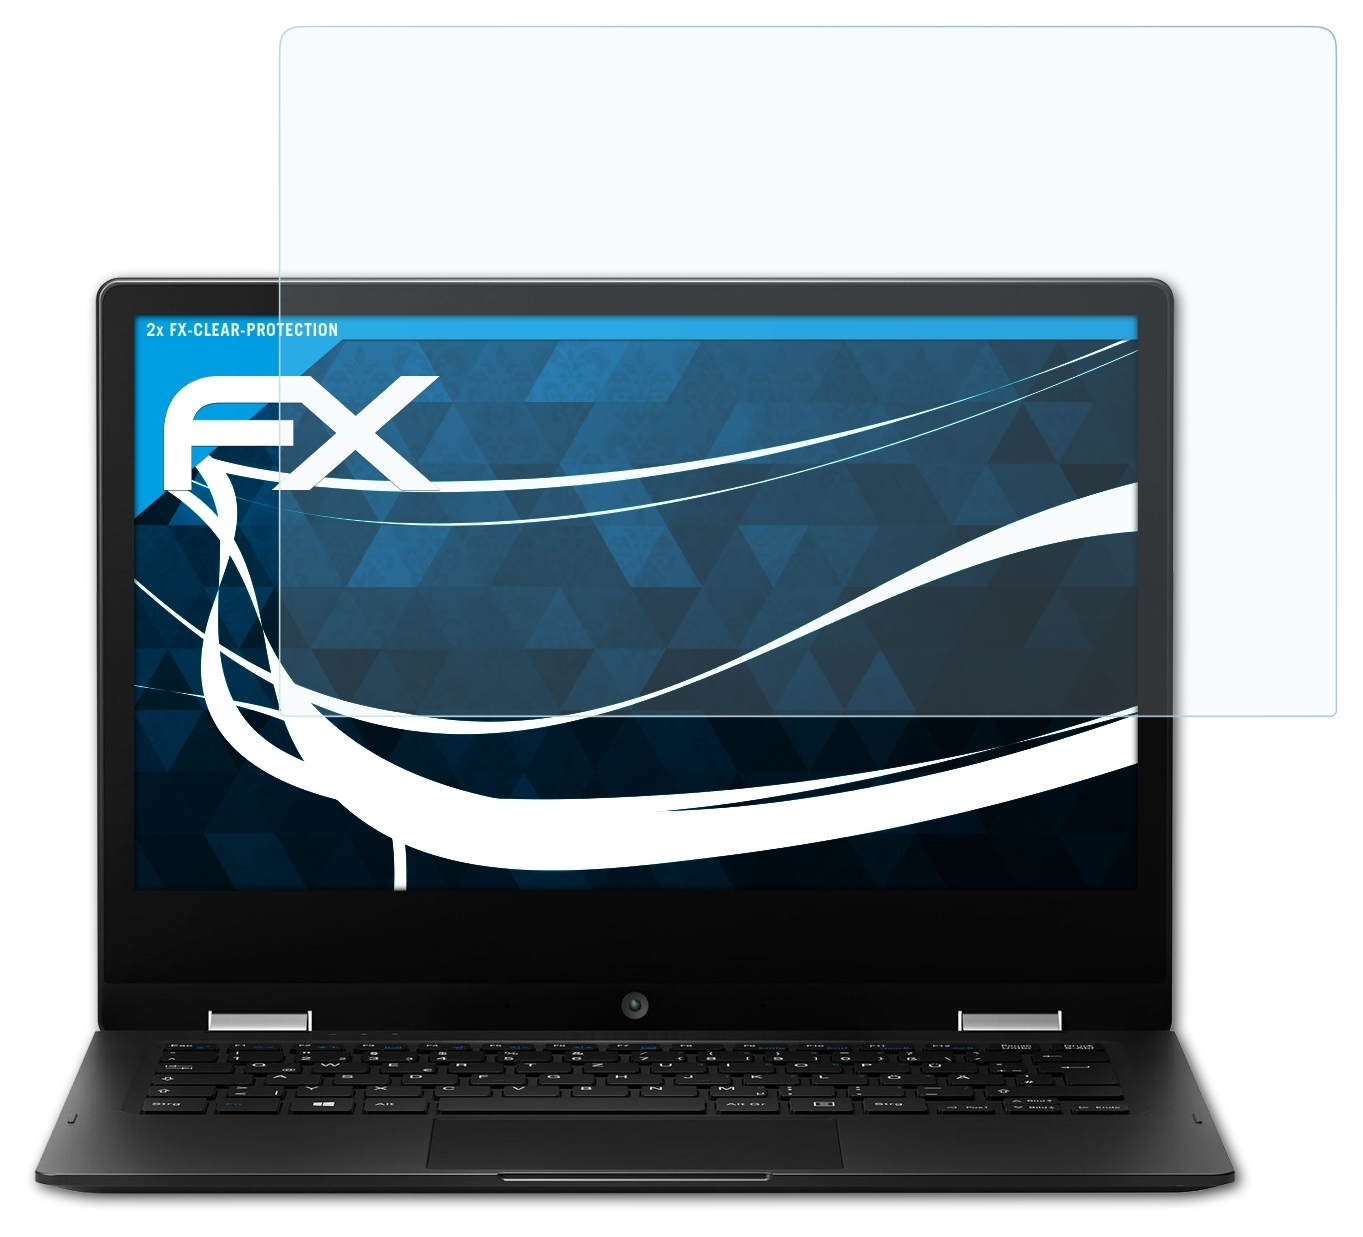 FX-Clear Medion (MD61093)) ATFOLIX Displayschutz(für 2x E2291 AKOYA